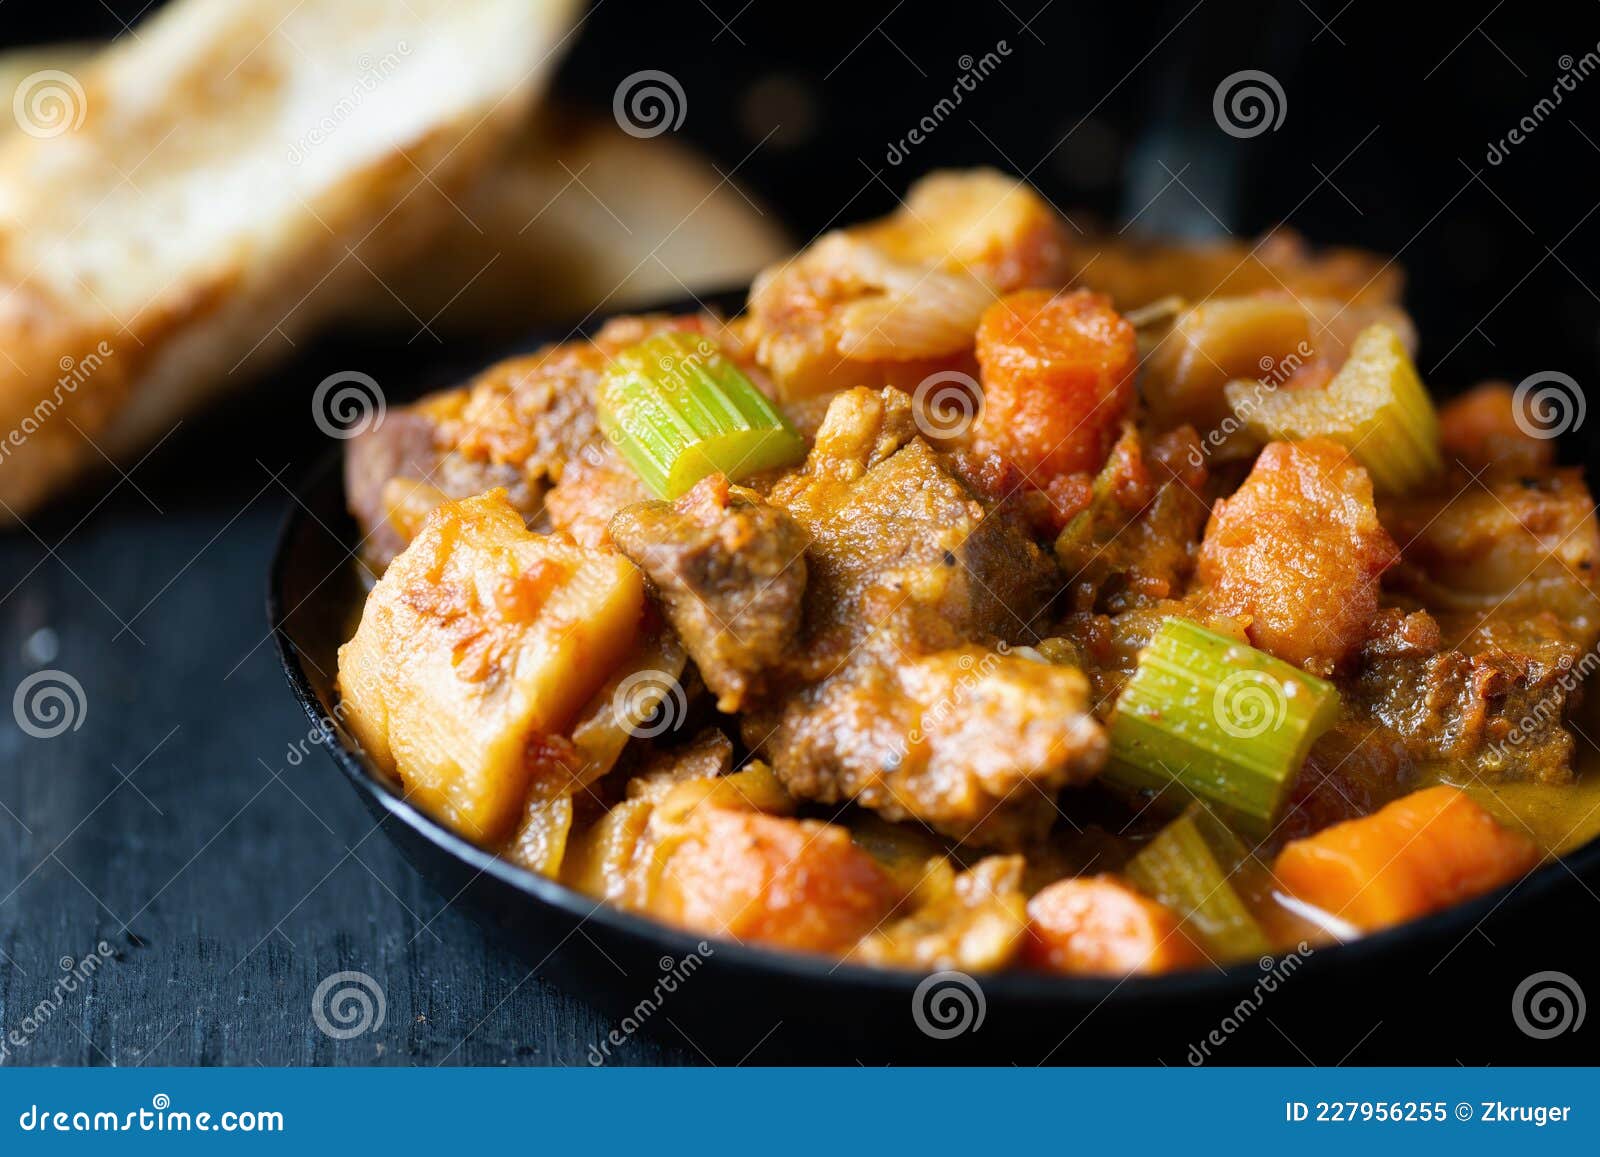 rustic beef lamb stew comfort food